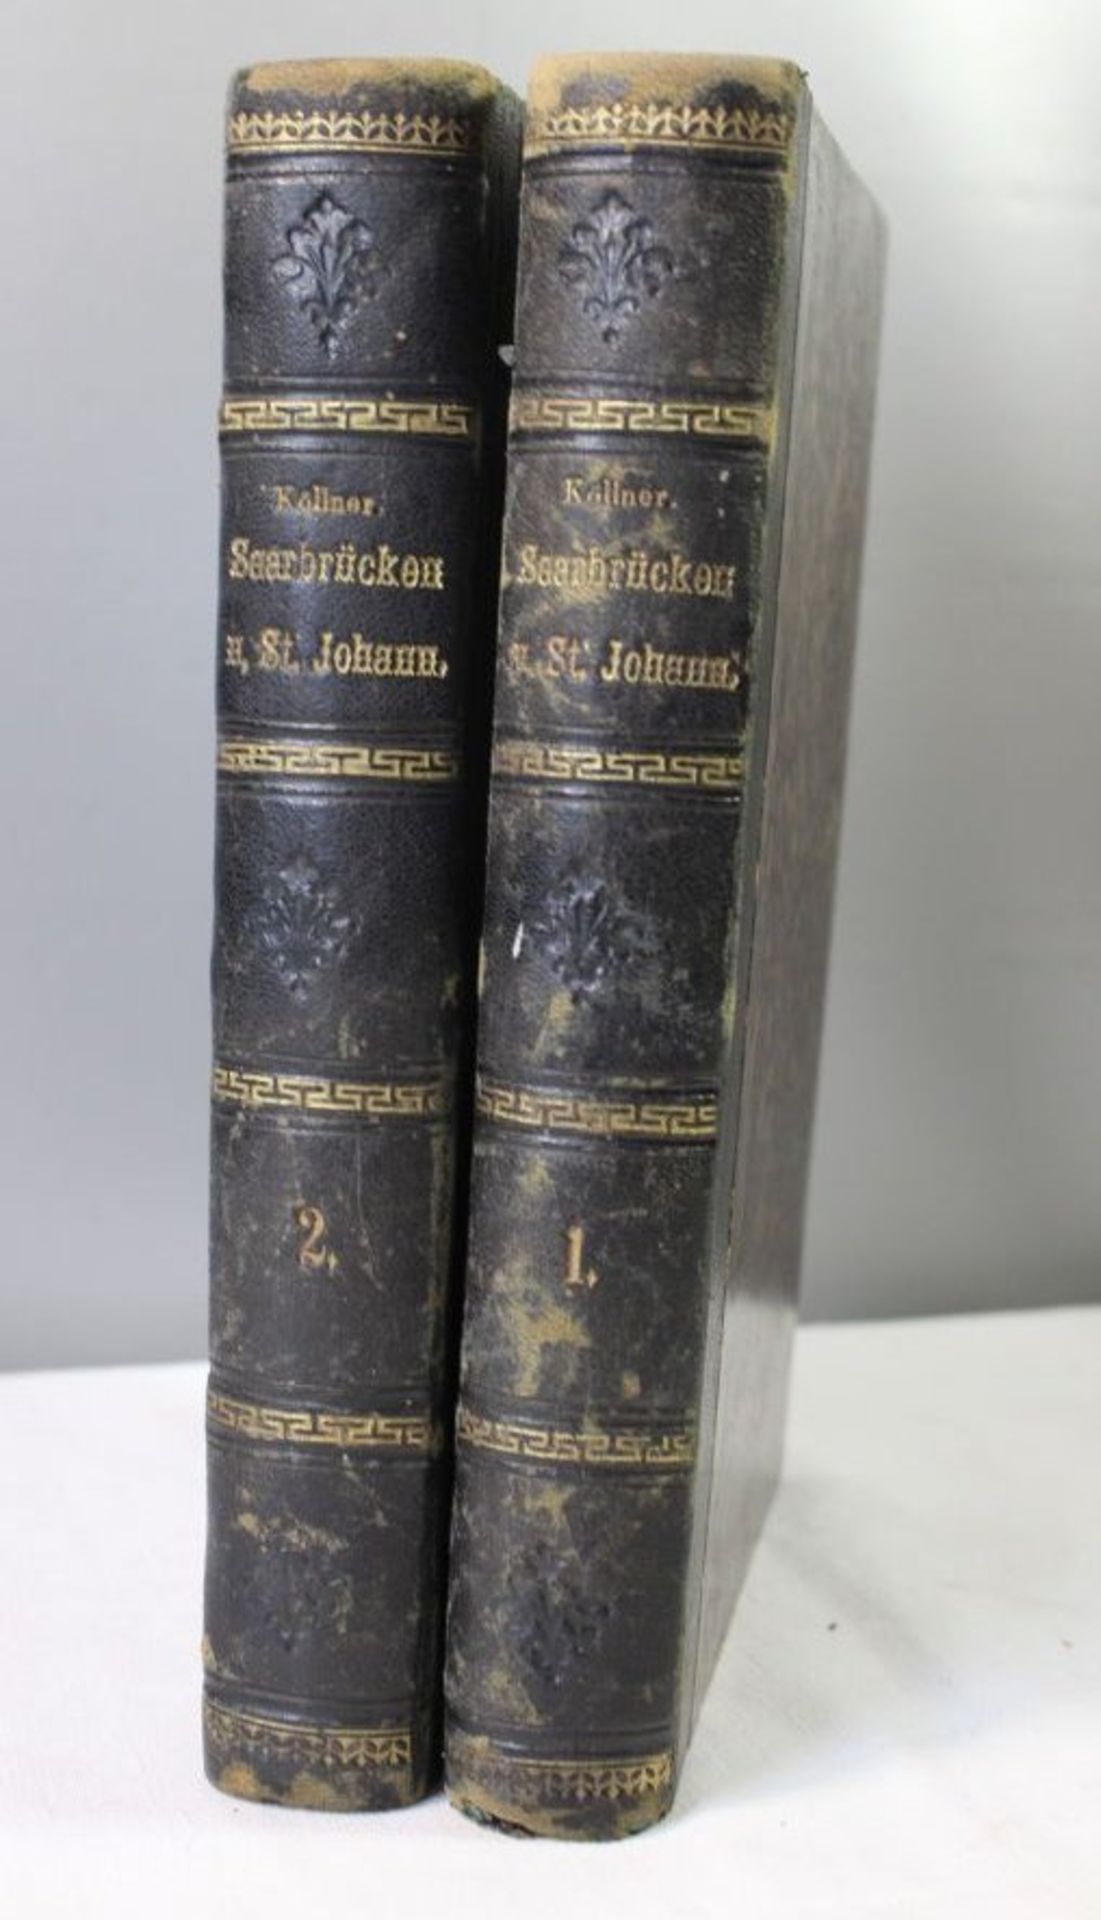 Adolph Köllner - Geschichte der Städte Saarbrücken uns St. Johann, 2 Bände, Saarbrücken 1865,